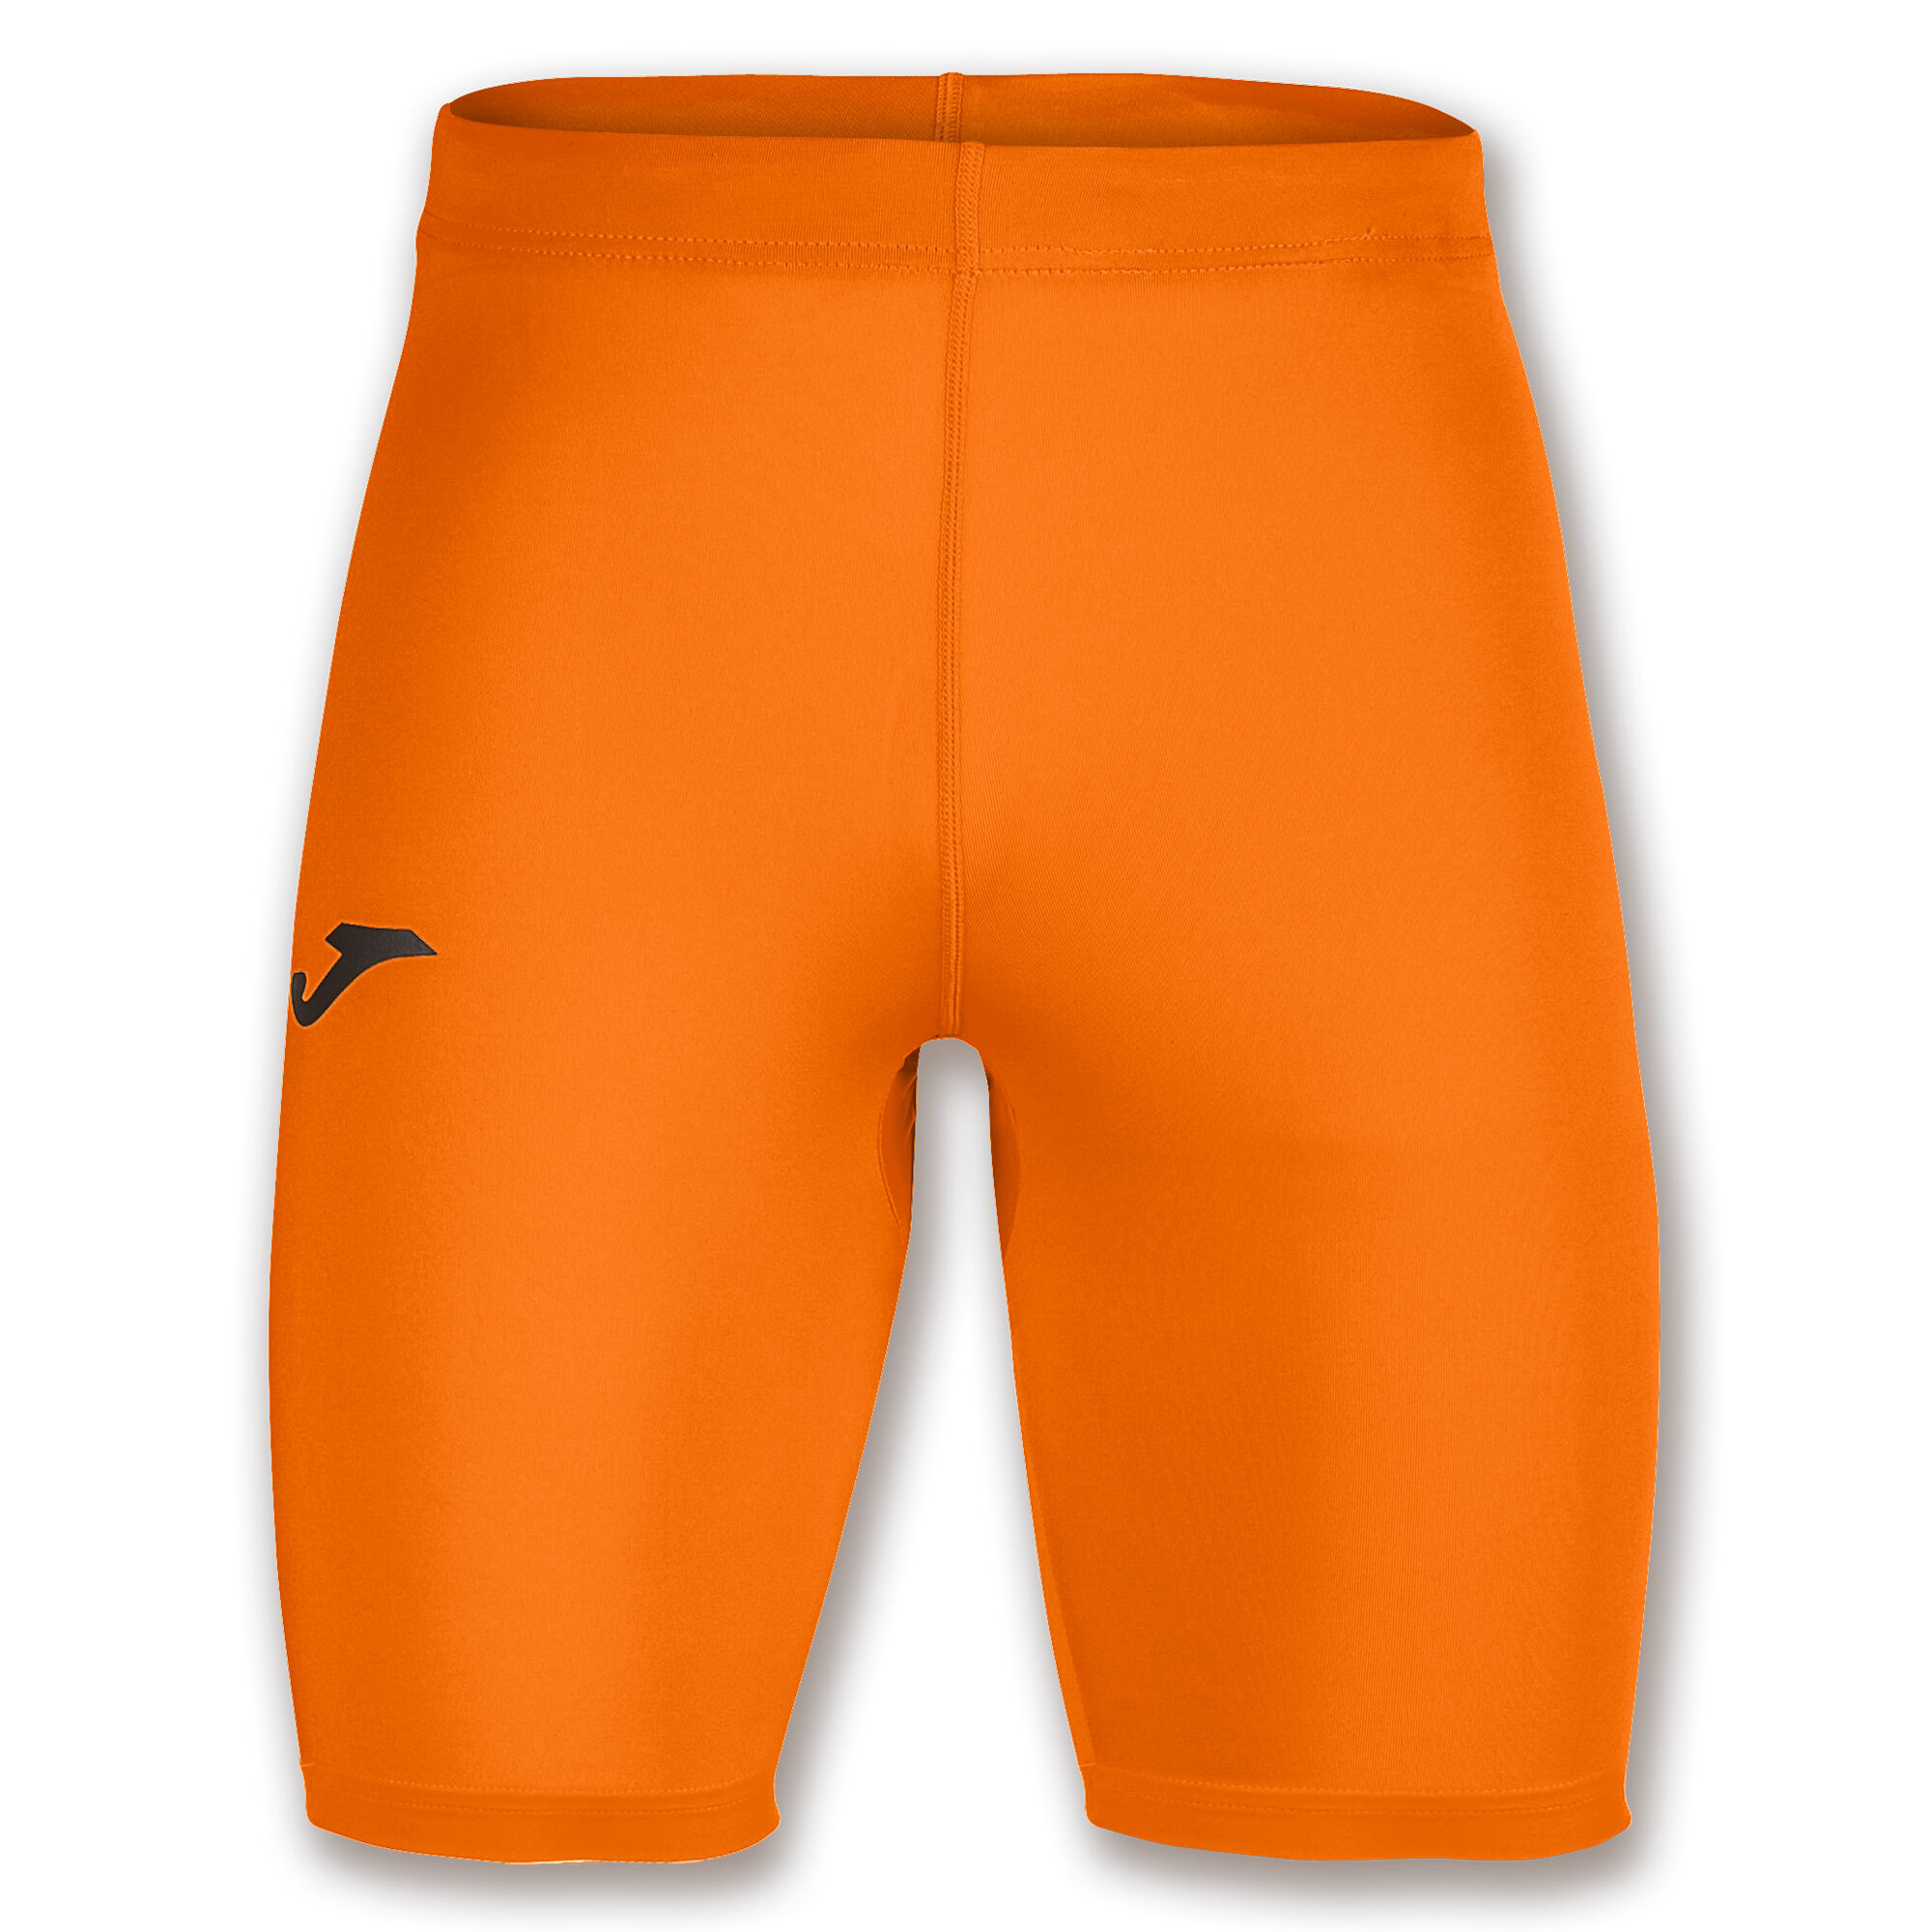 Short tights man Brama Academy orange